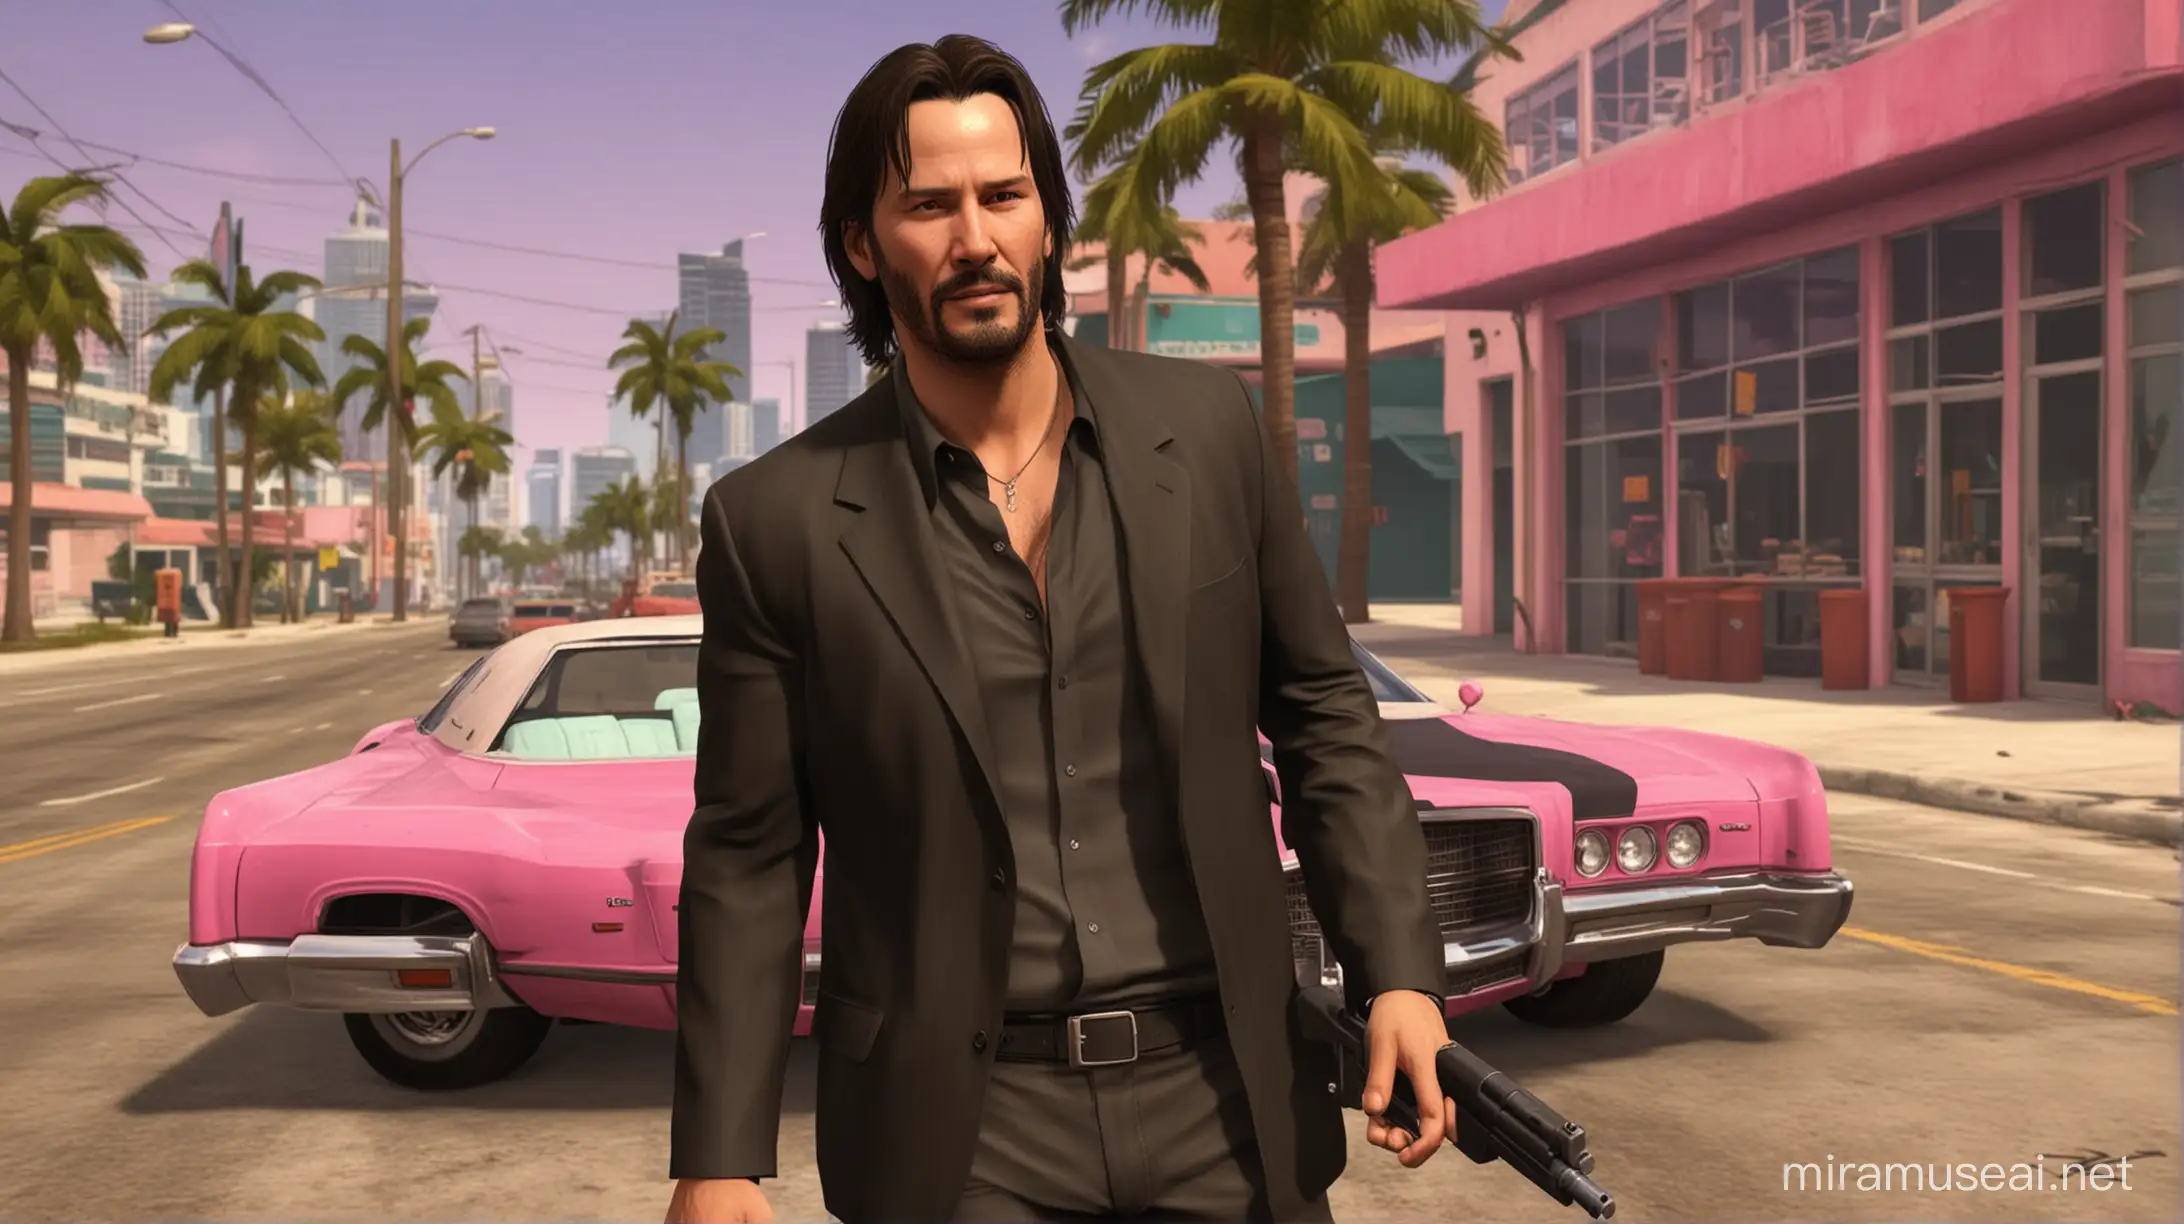 actor Keanu reeves in GTA Vice City style